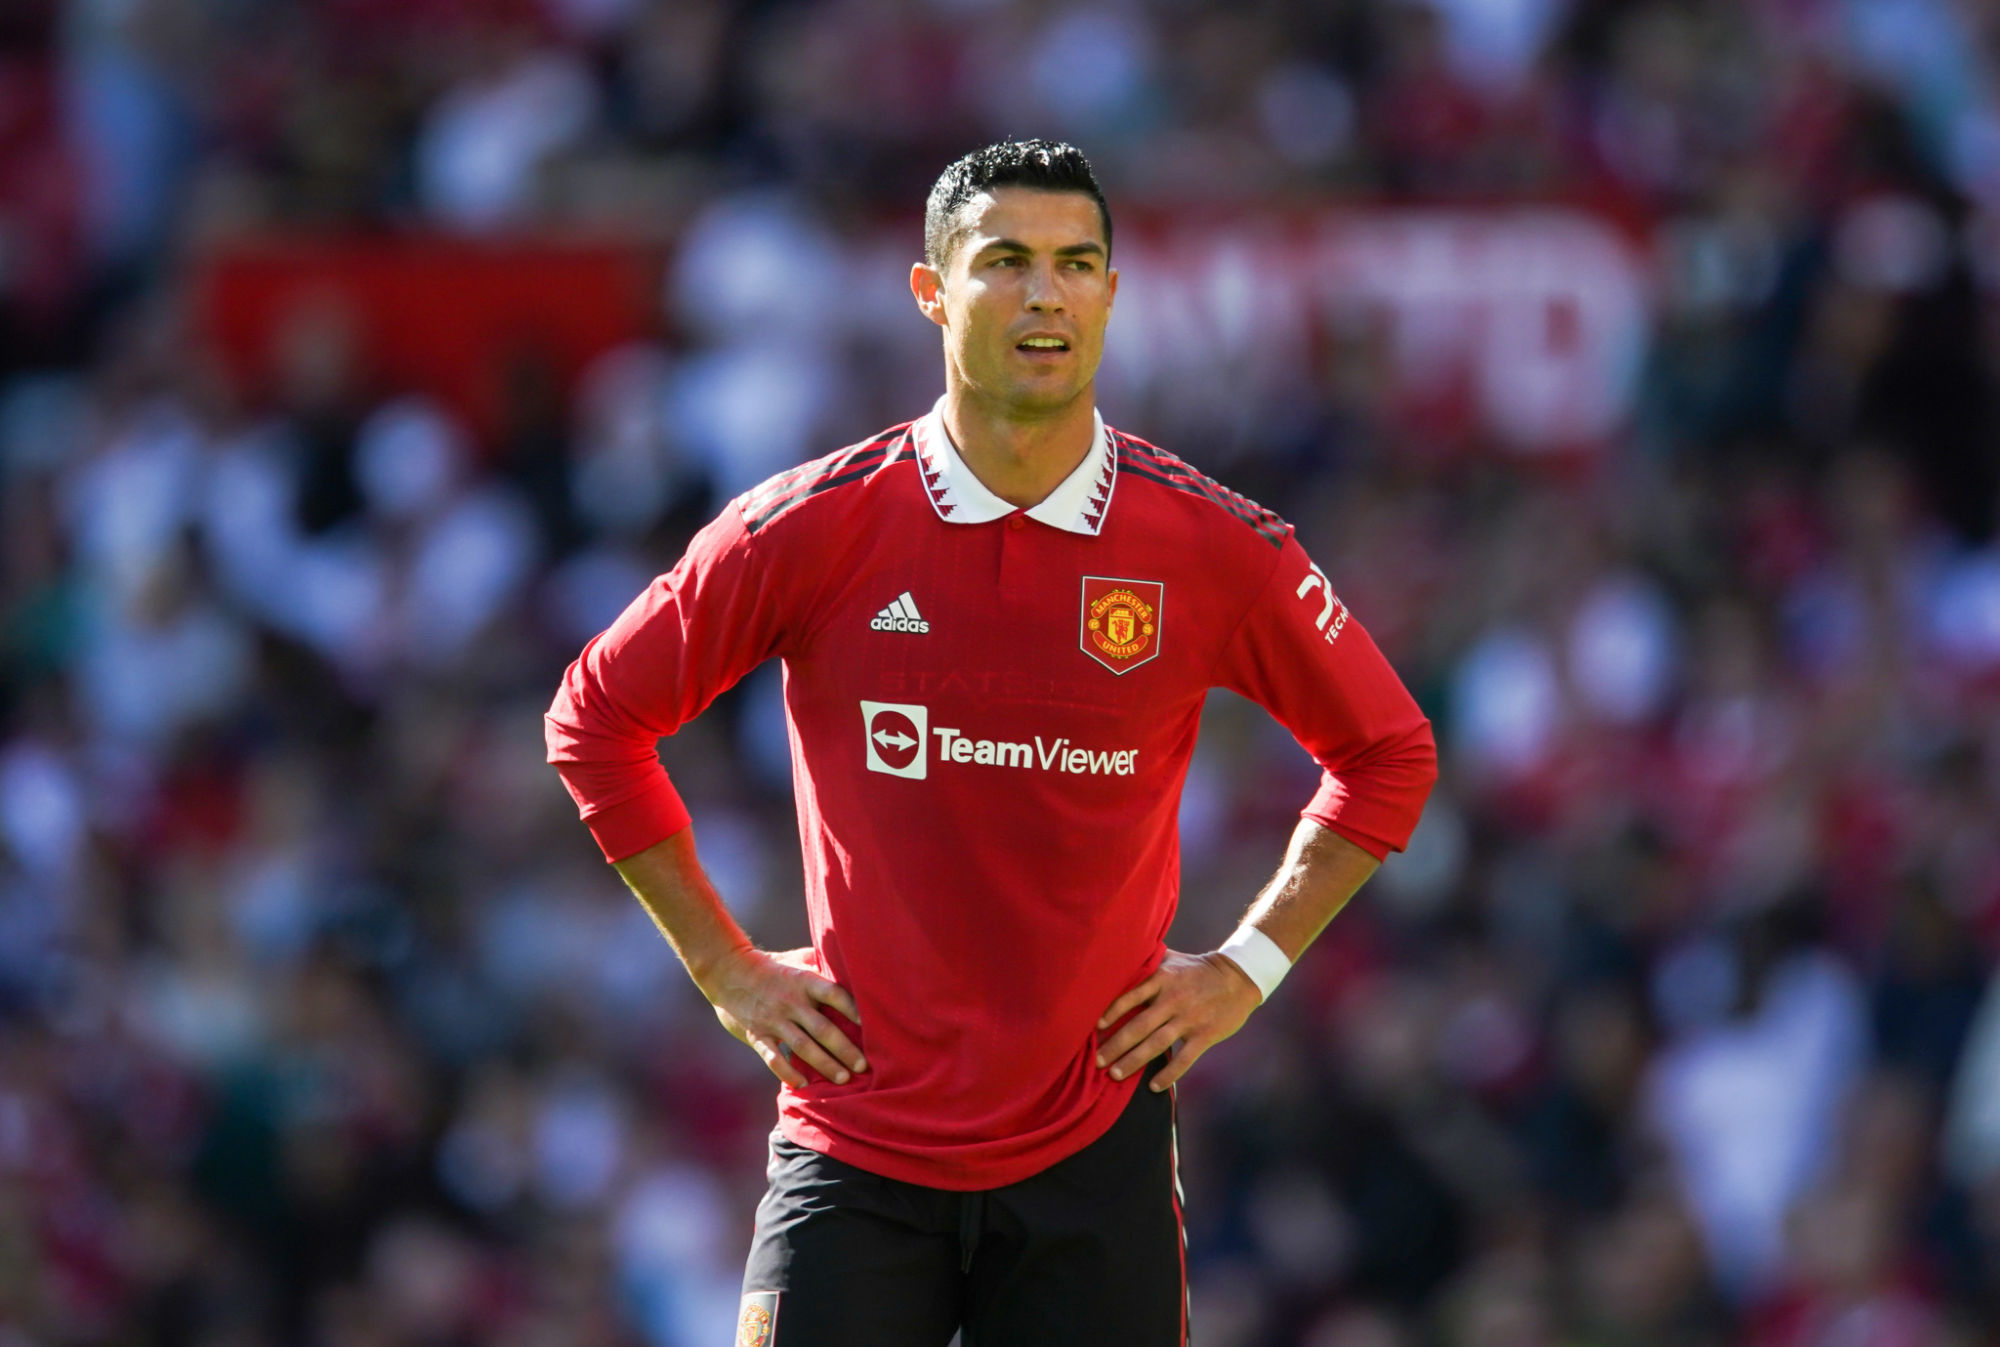 Interview explosive de Cristiano Ronaldo : Man United sort du silence (communiqué)